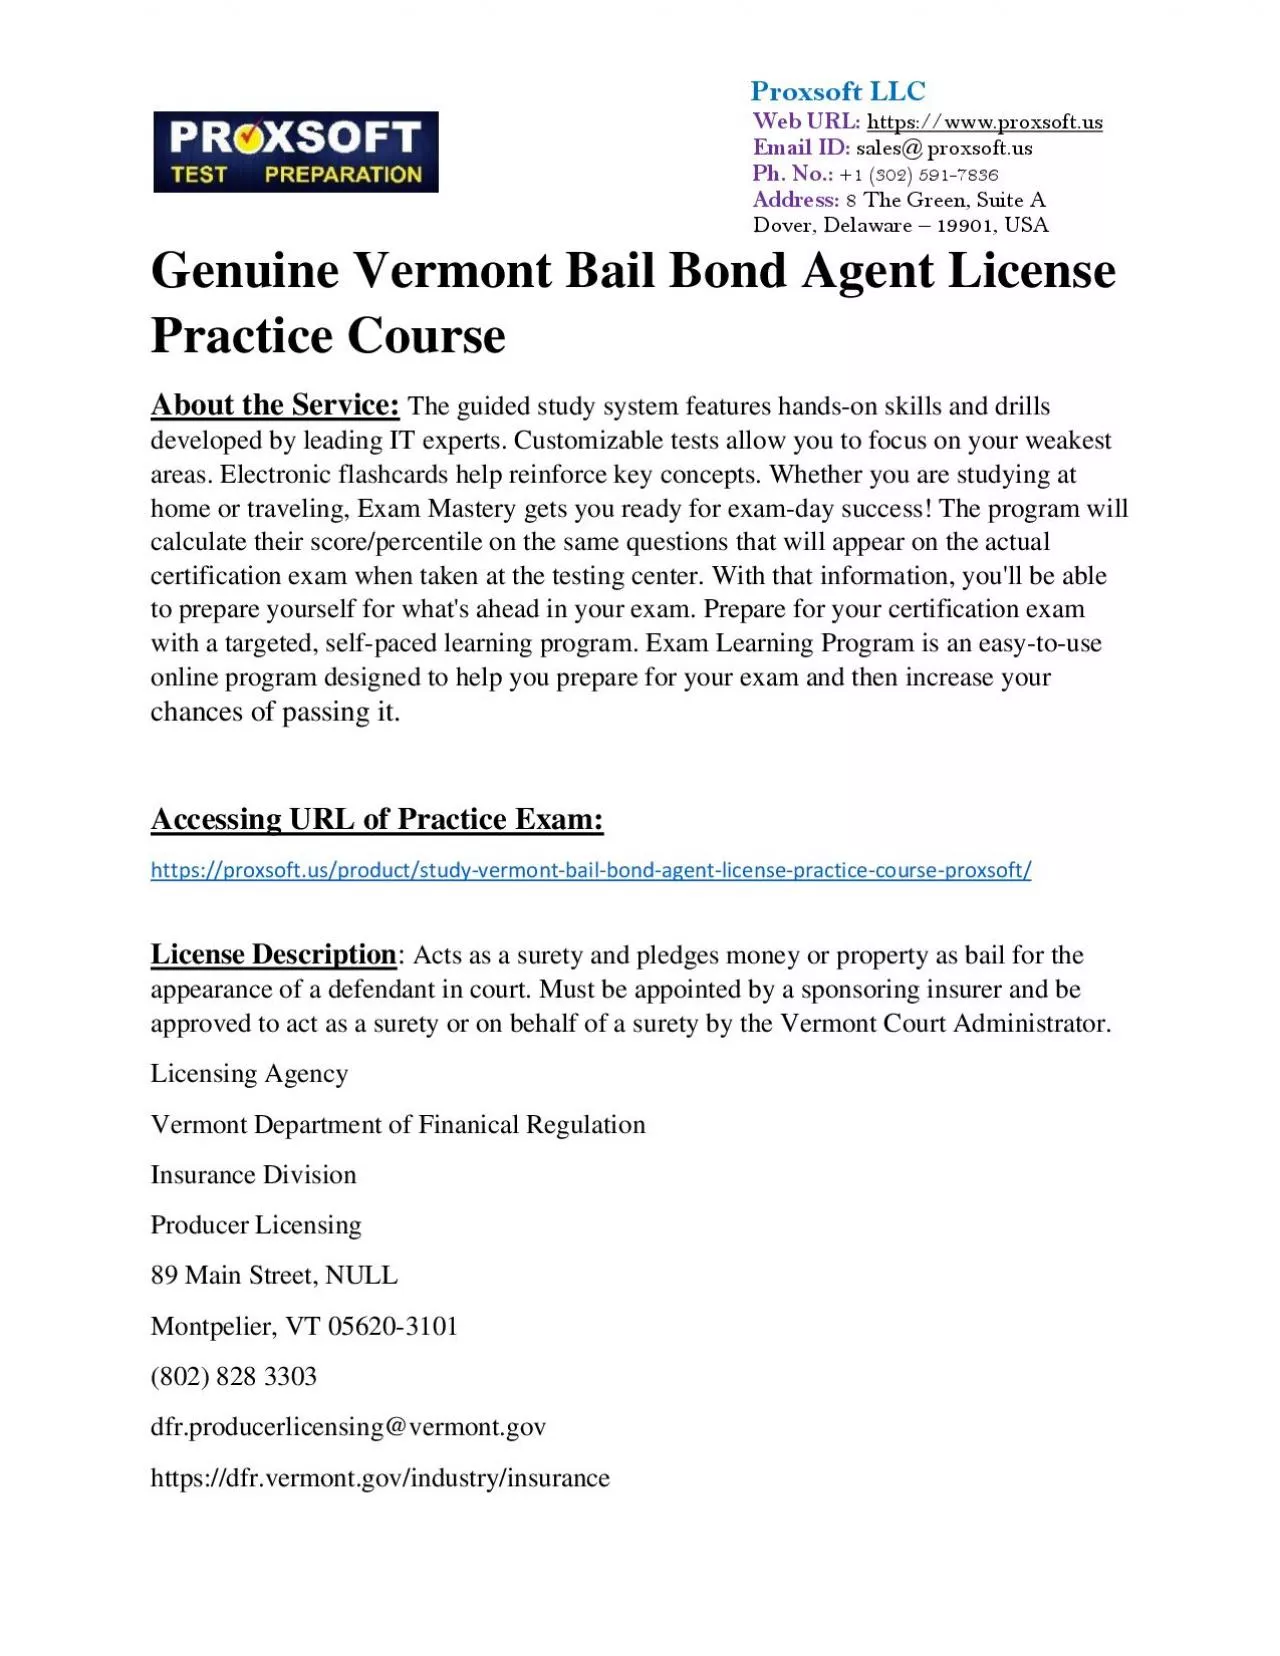 Genuine Vermont Bail Bond Agent License Practice Course